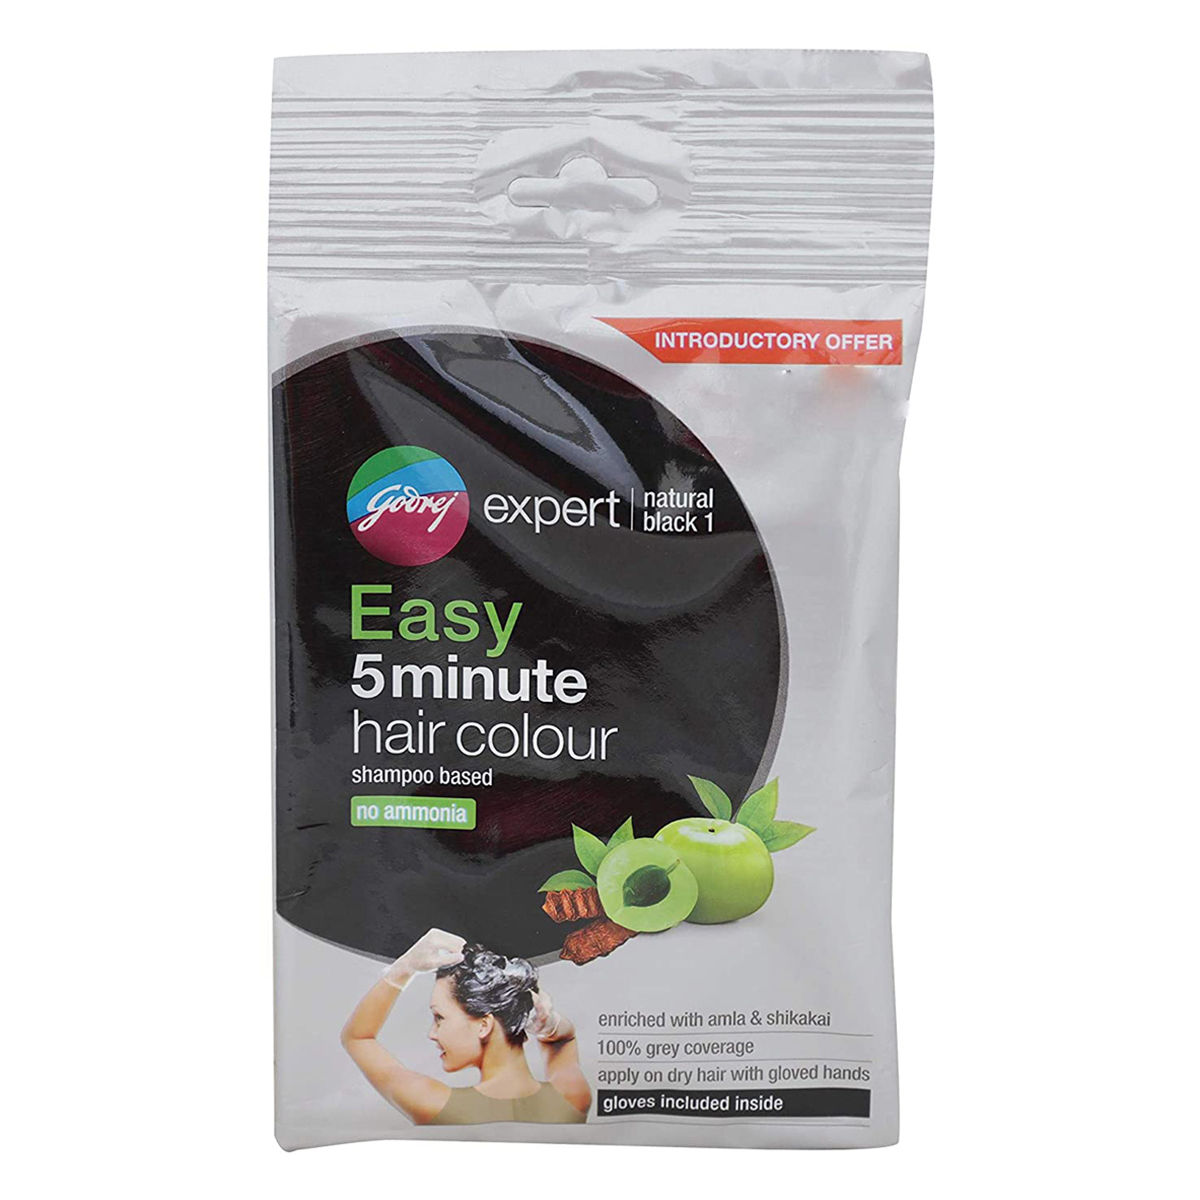 Buy Godrej Expert Shampoo Based Hair Colour Natural Black 1, 20 gm Online